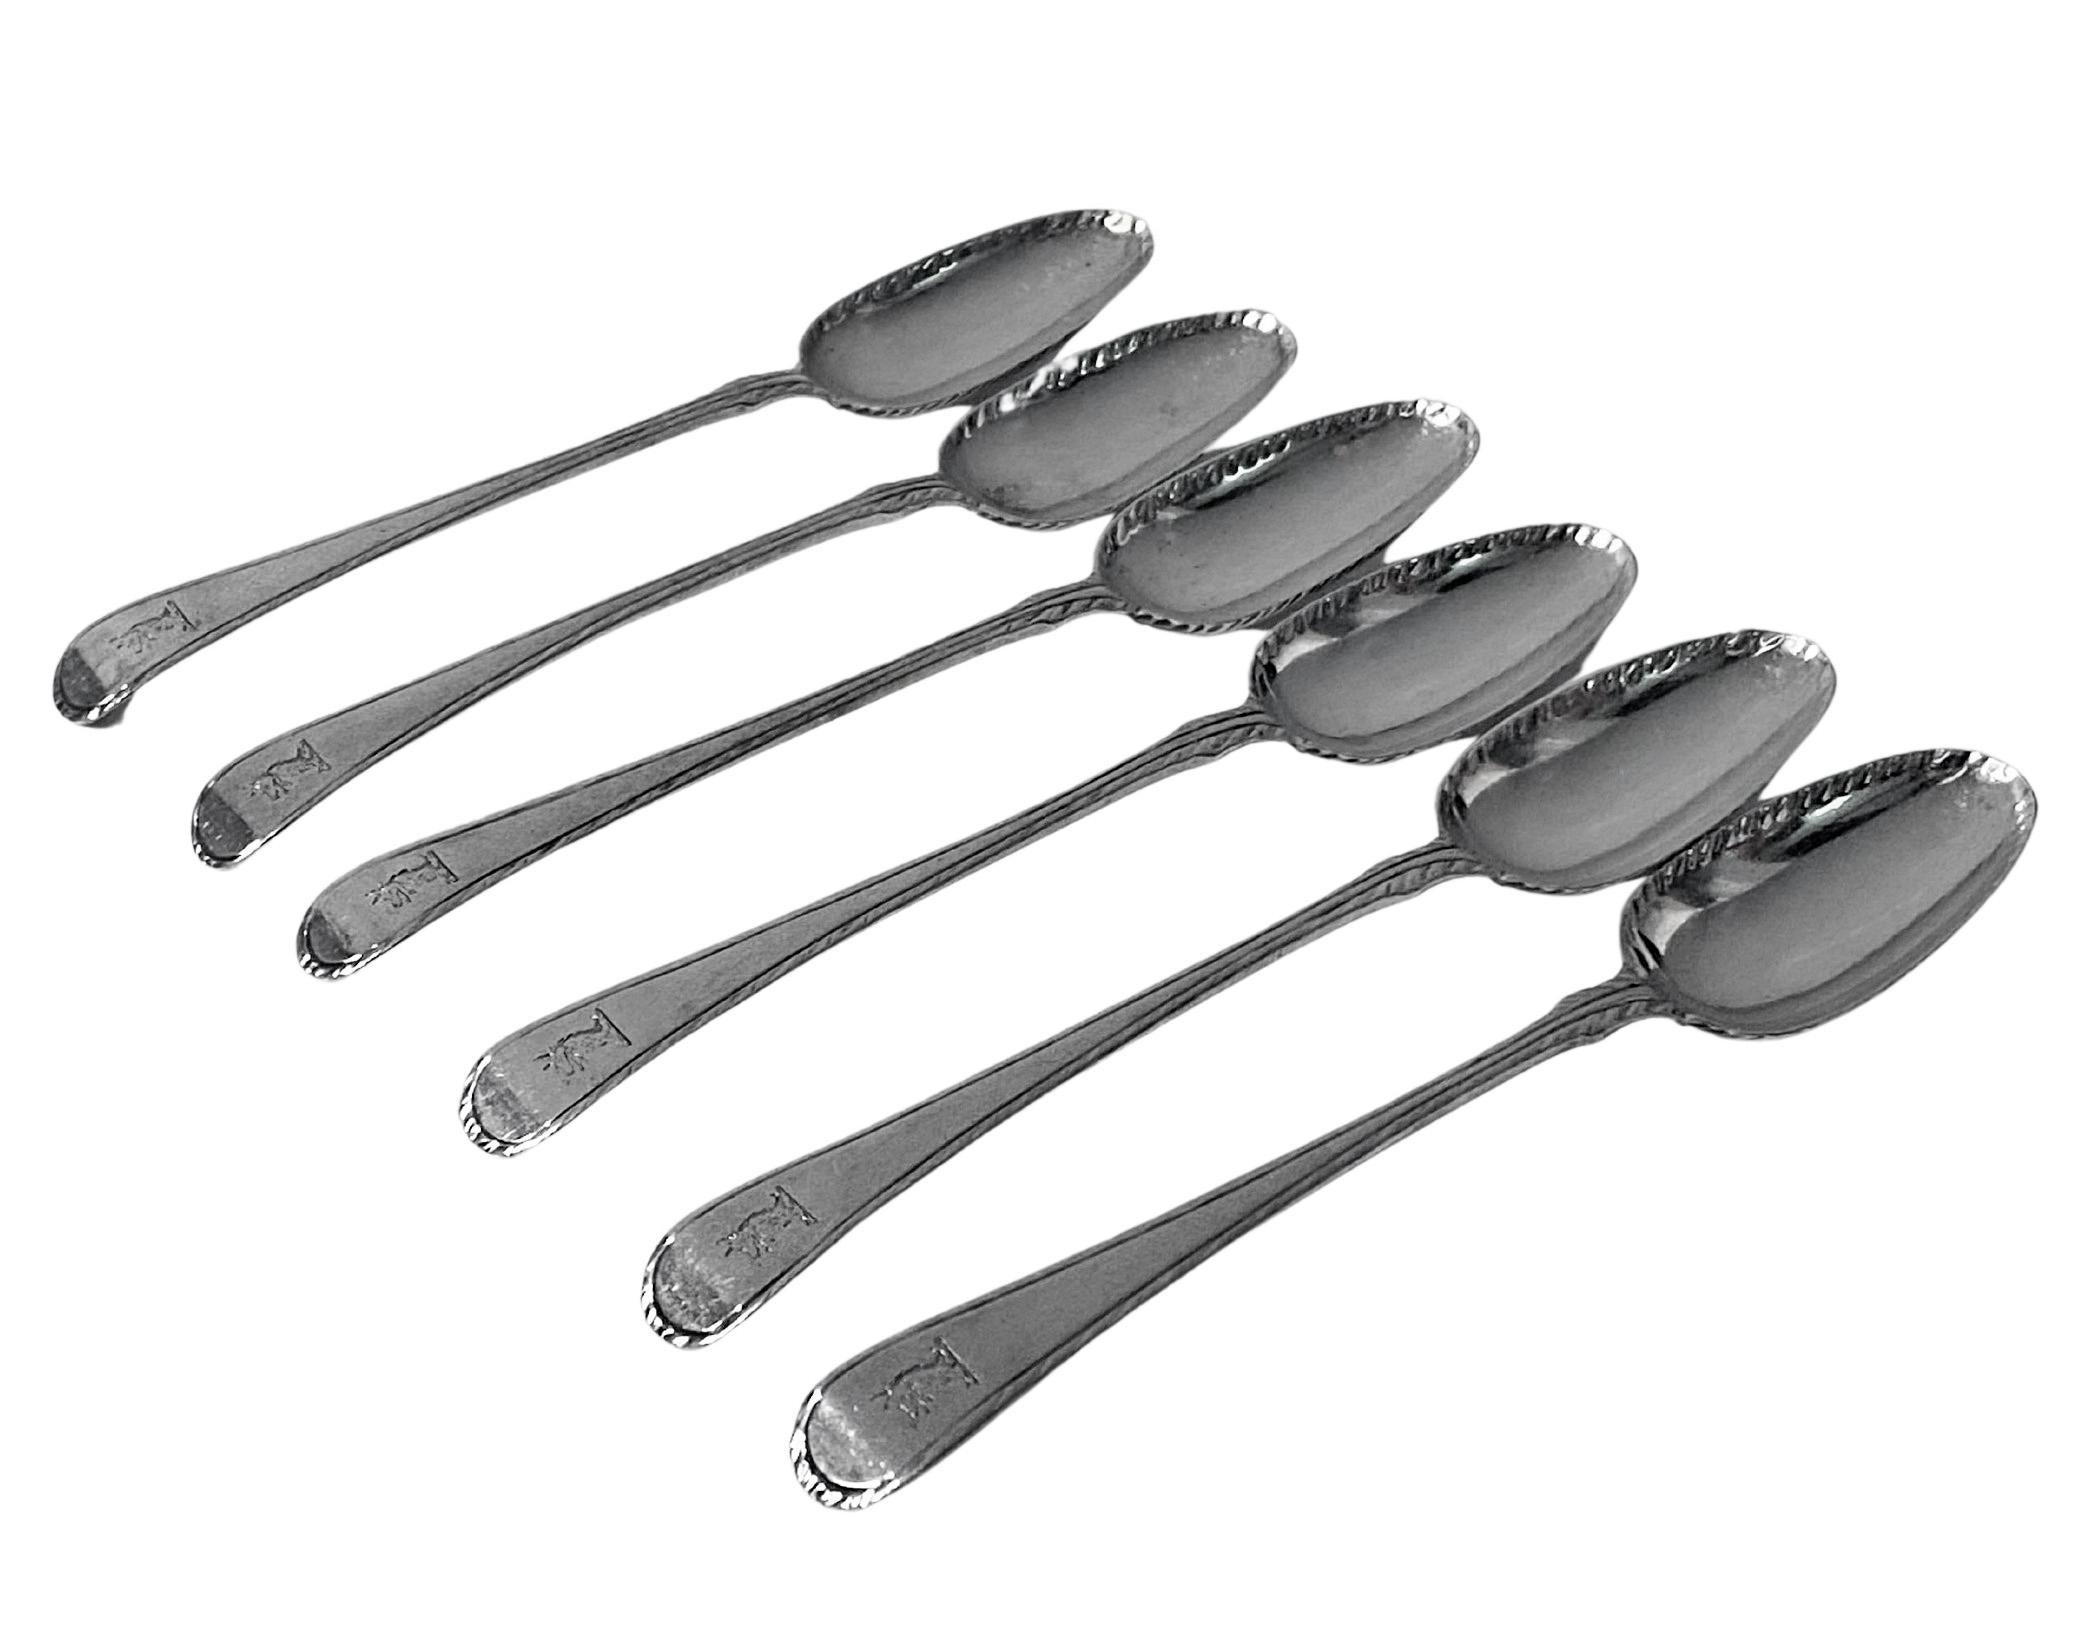 old spoon markings